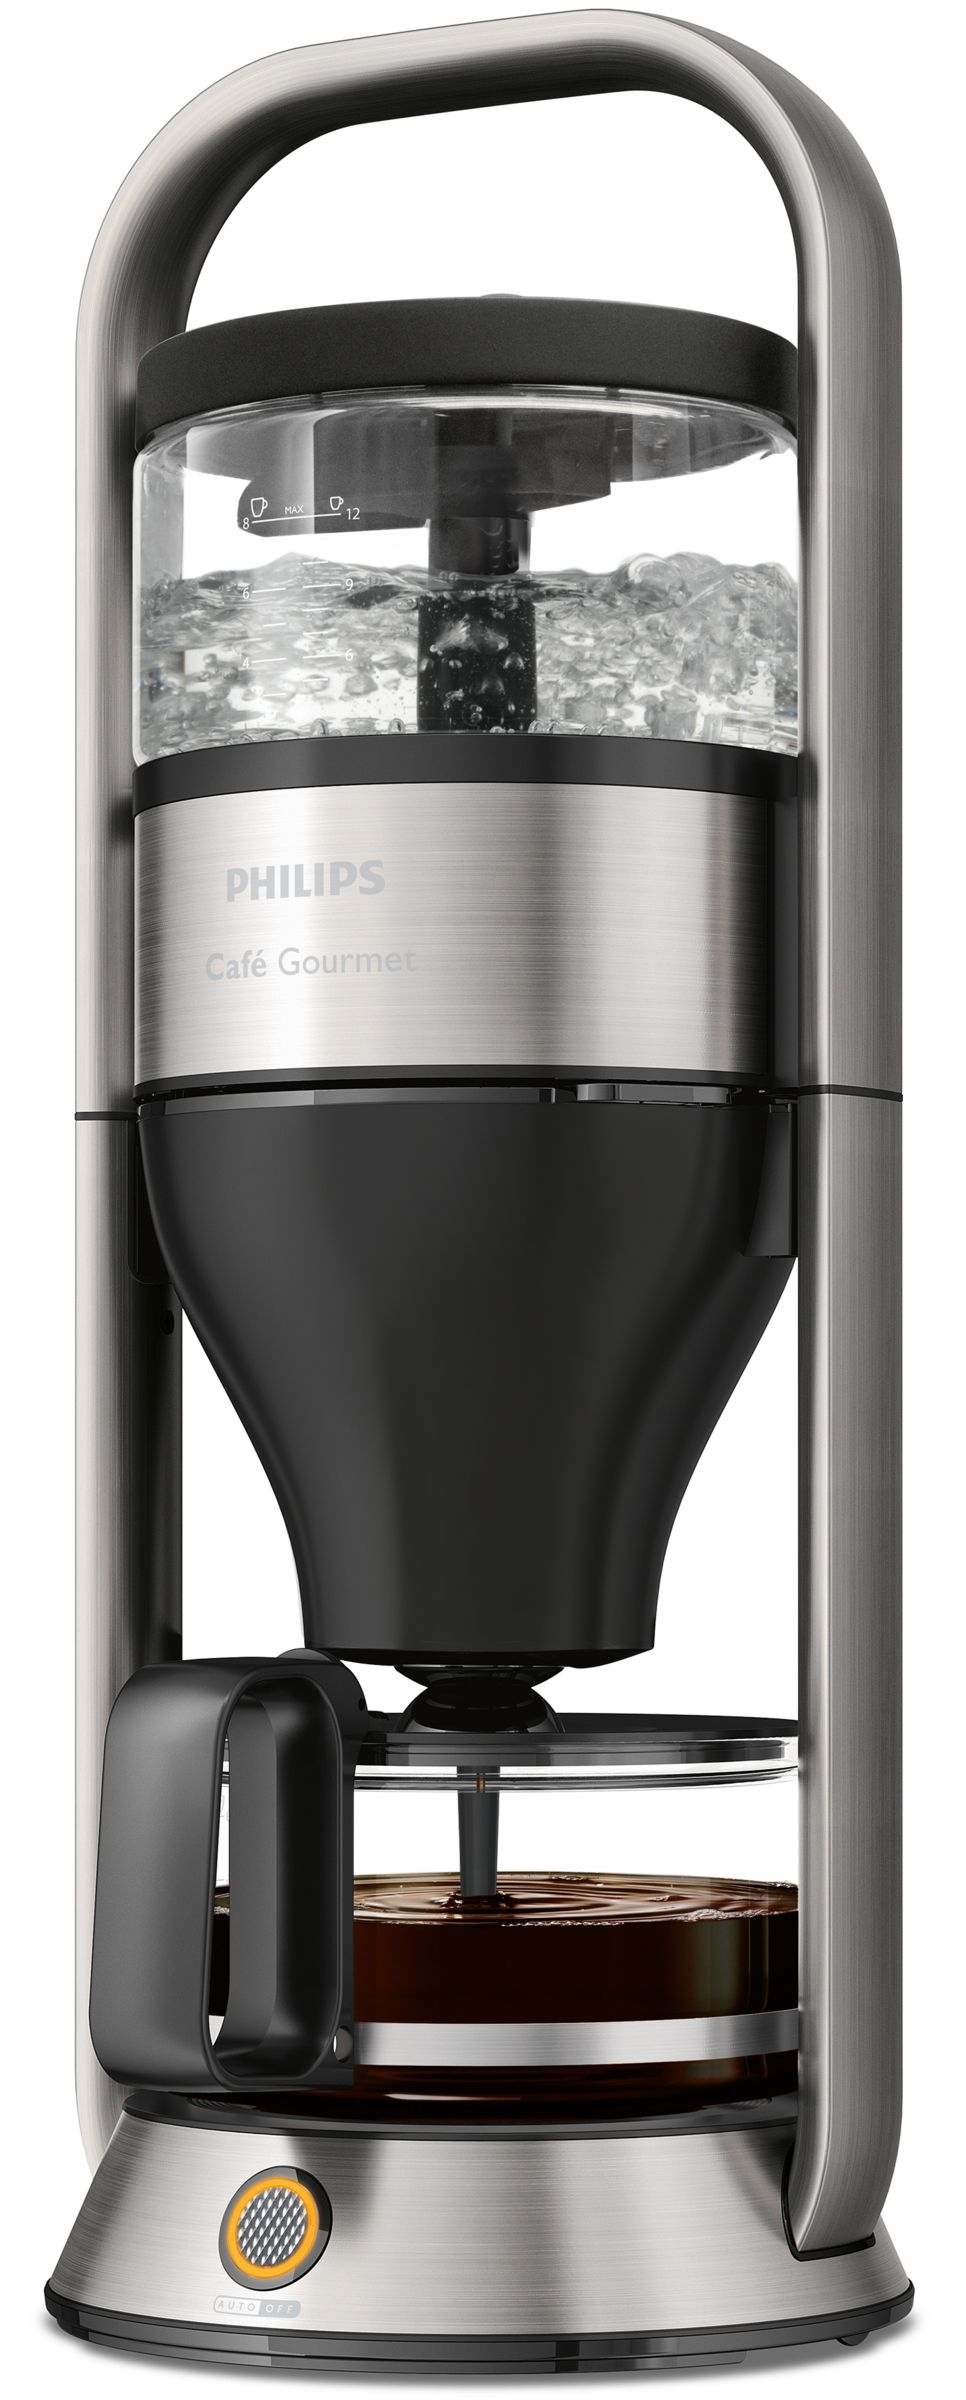 Philips Café Gourmet HD5413/00R1 coffee maker